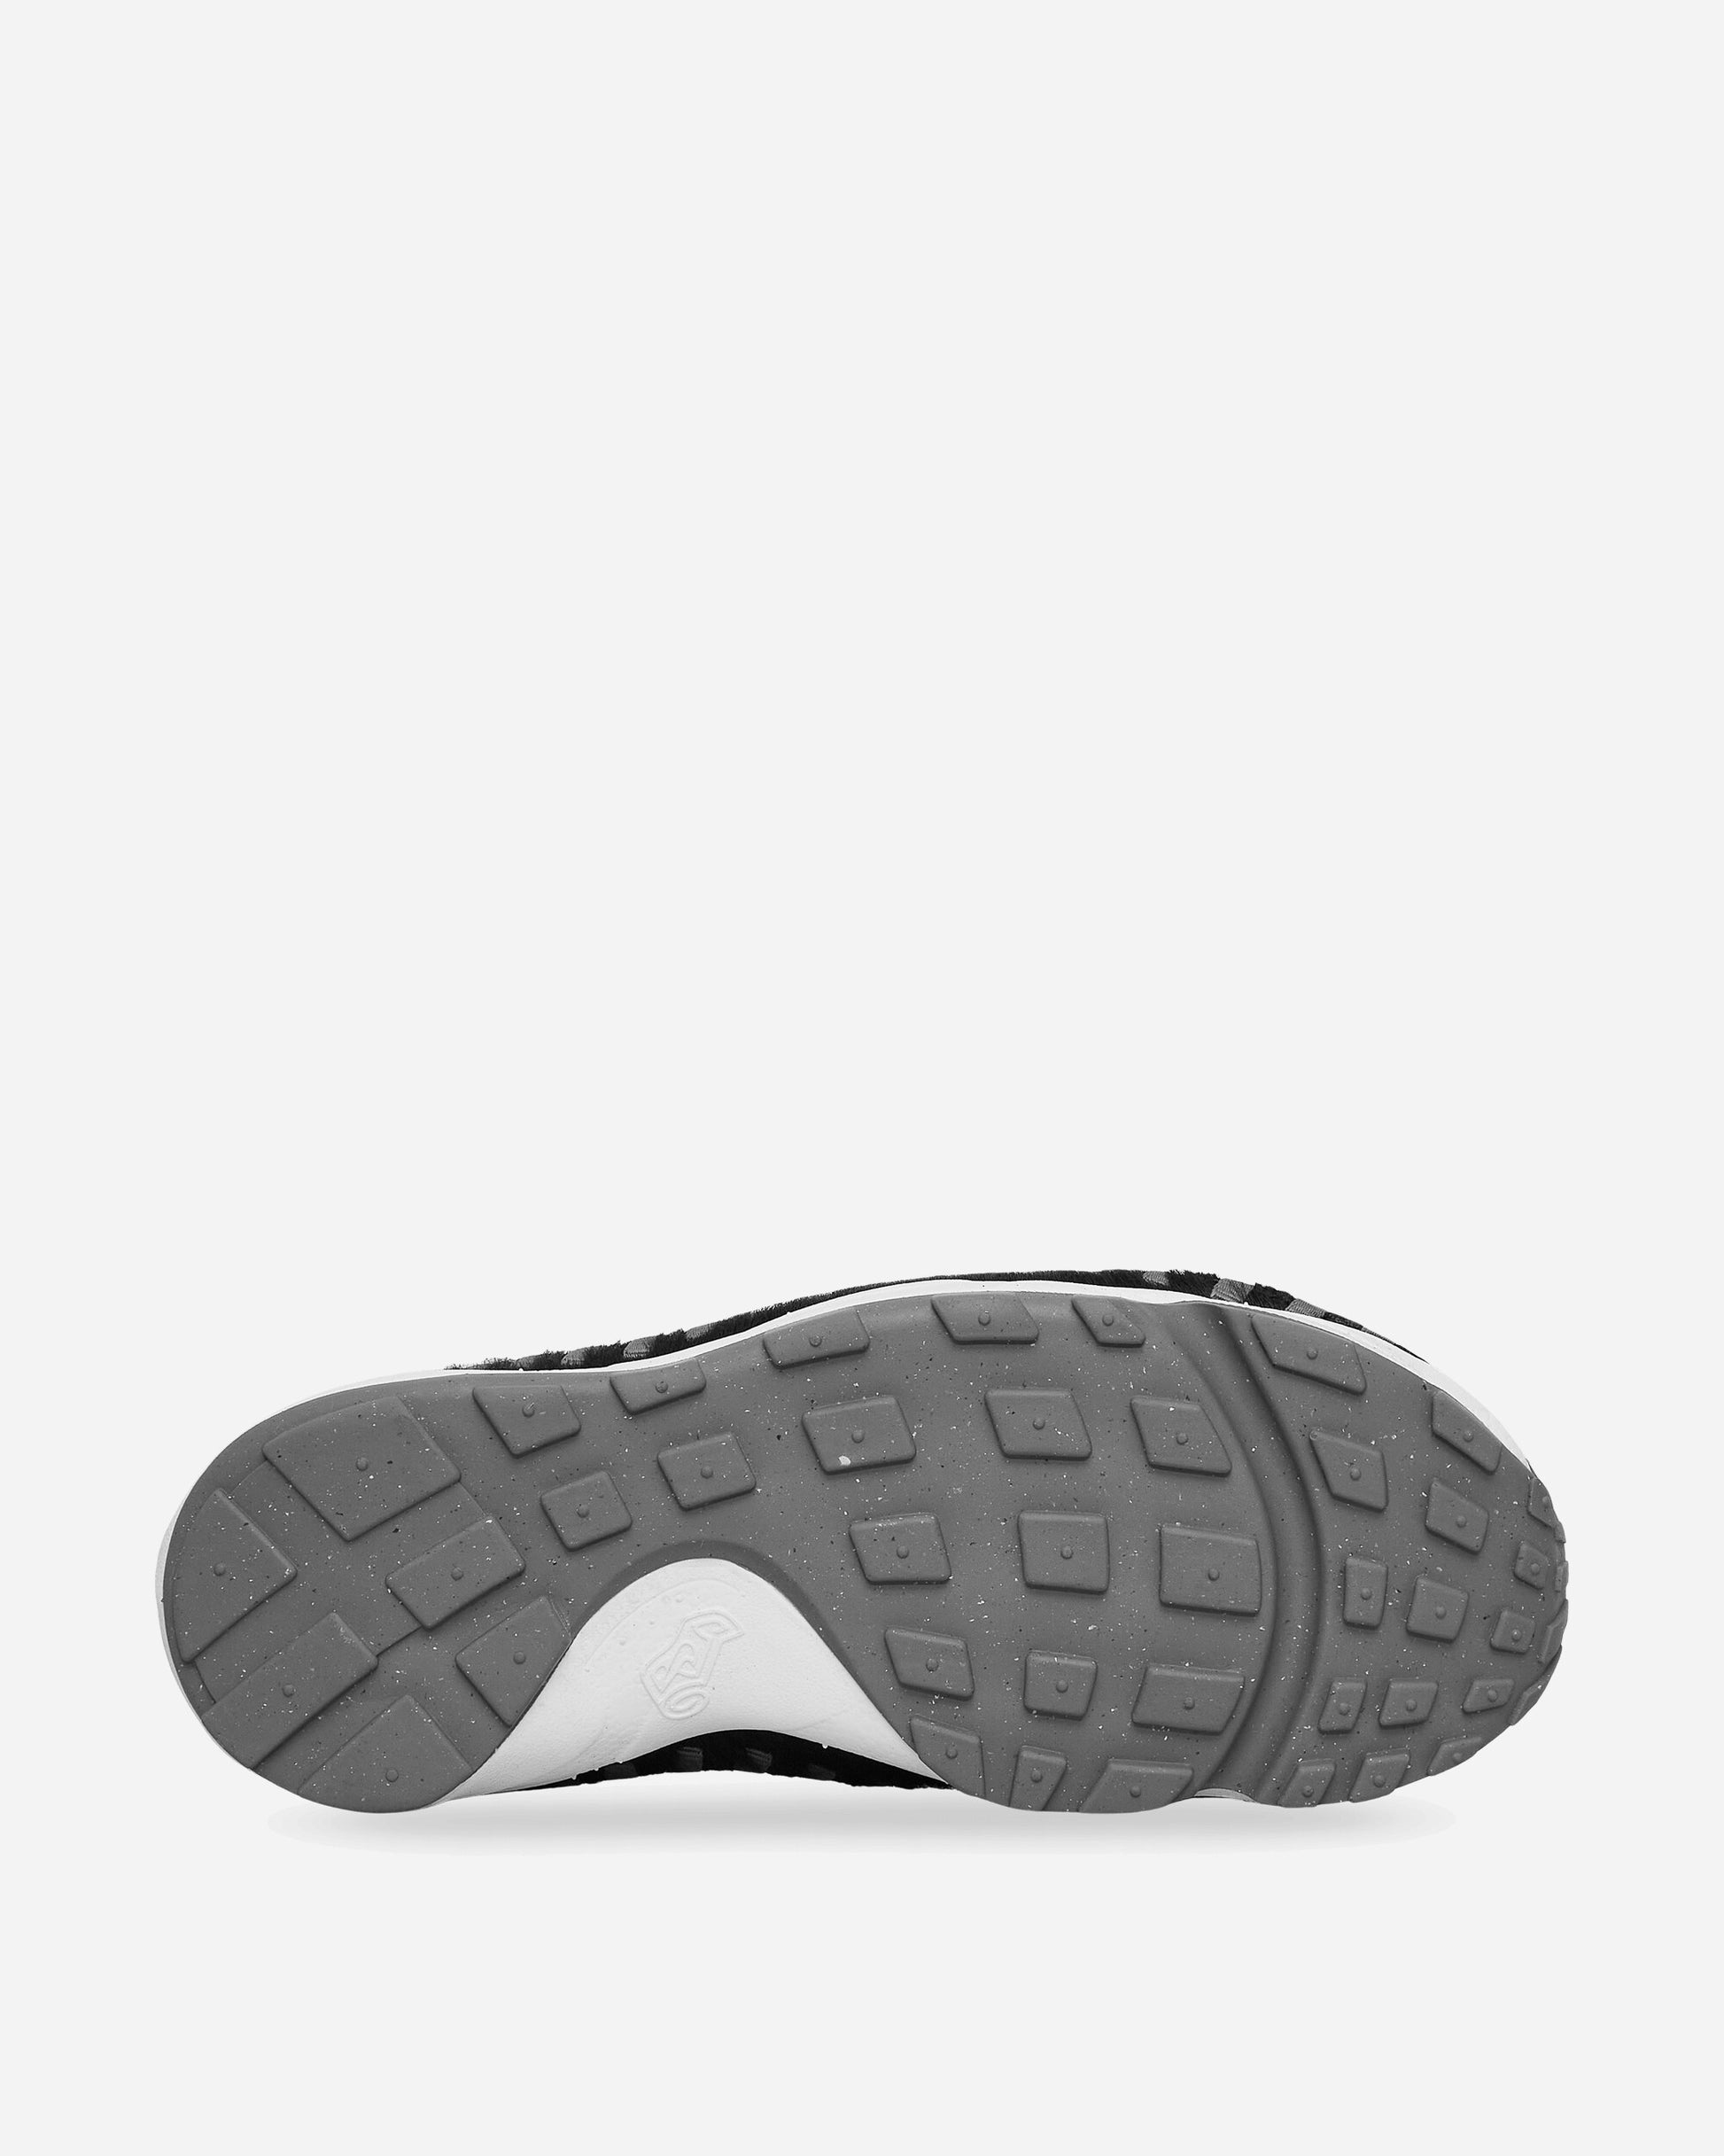 Nike Air Footscape Woven Black/Smoke Grey Sneakers High FB1959-001